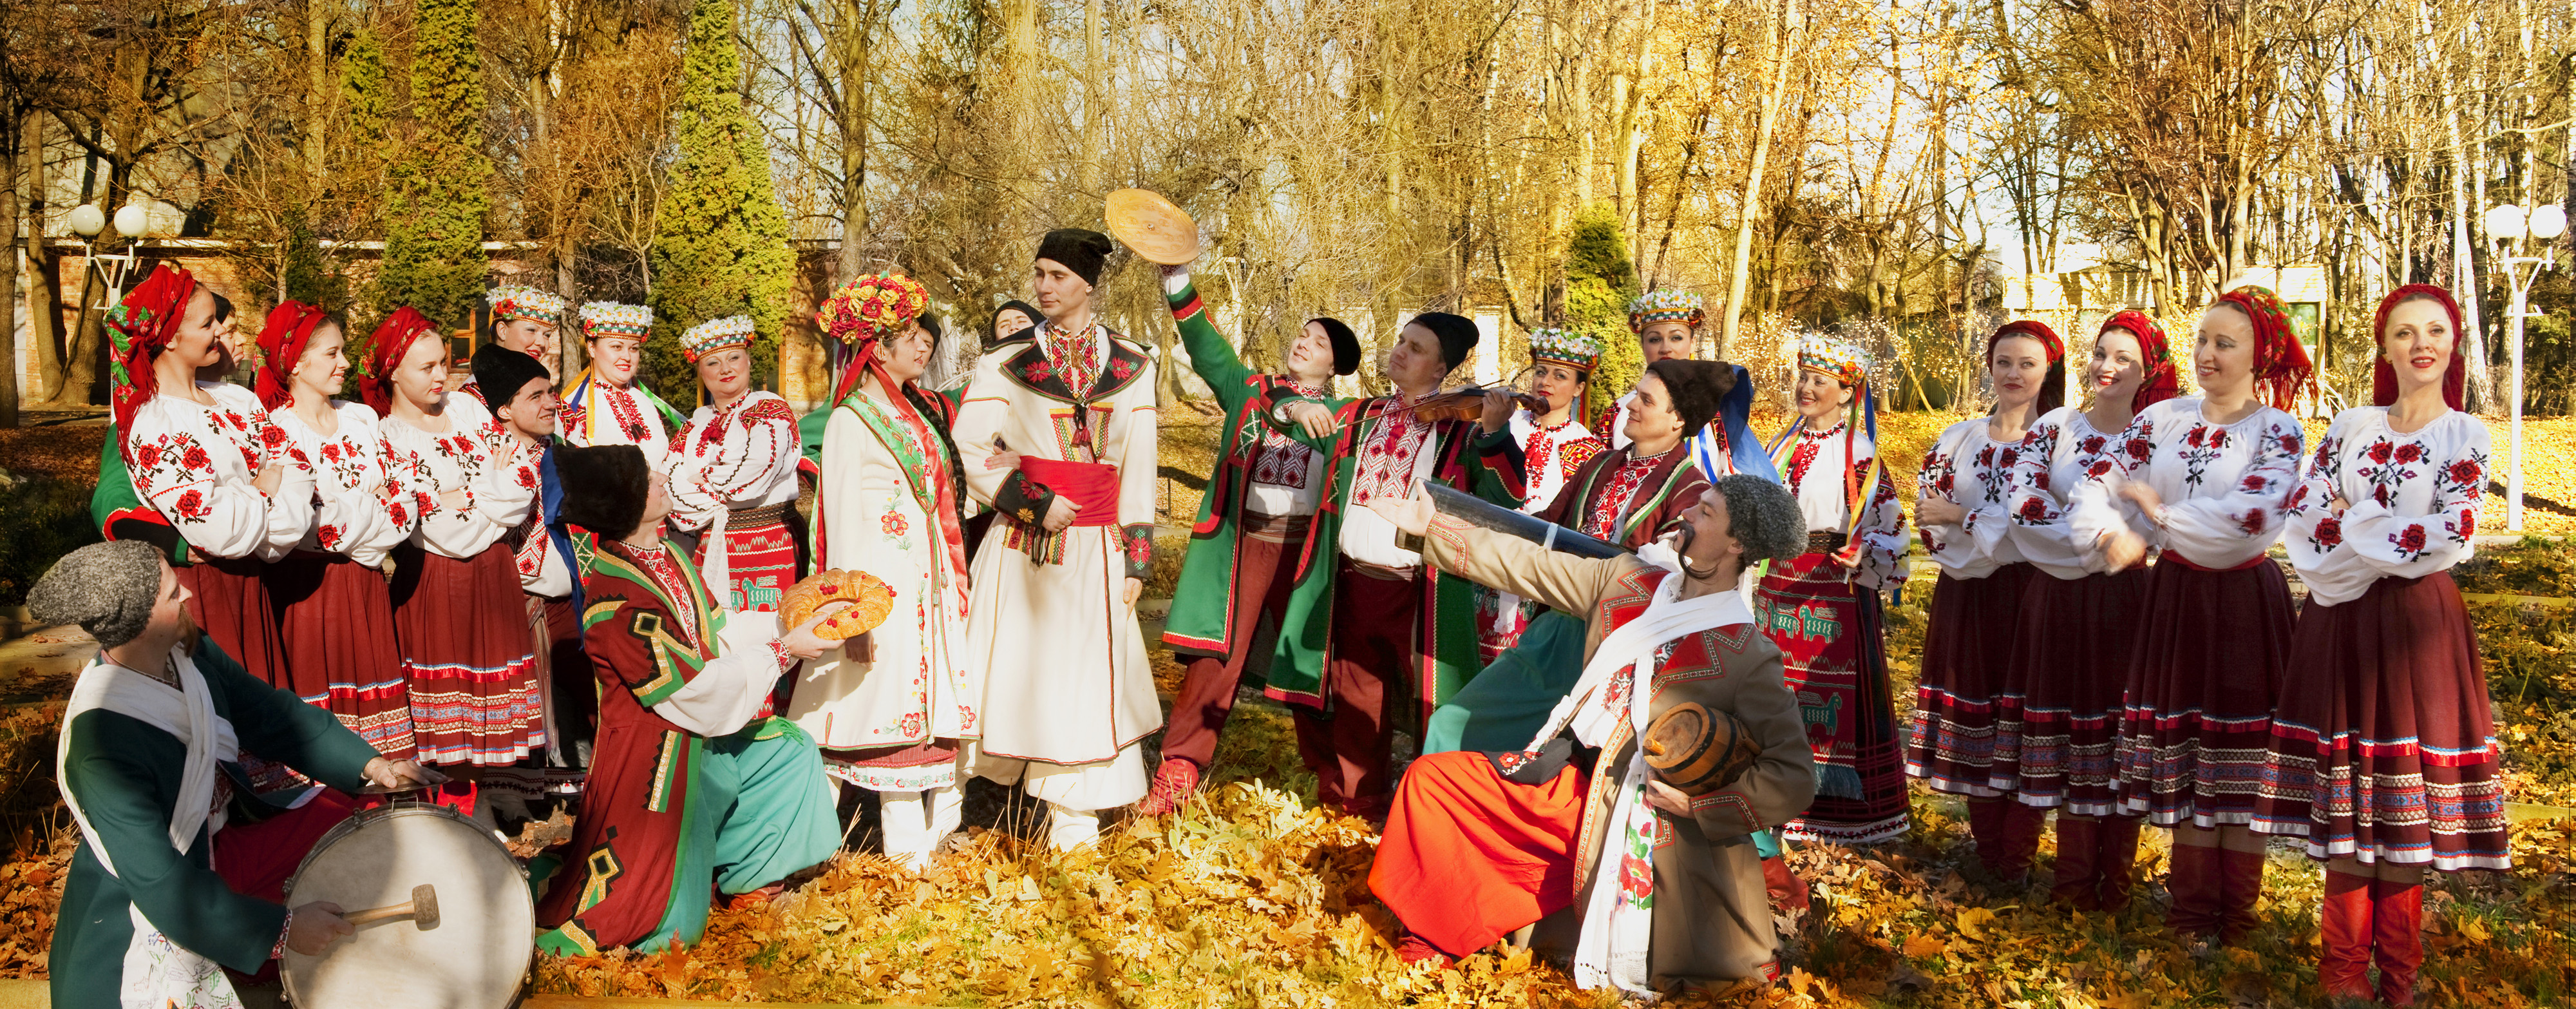 Ukrainian Culture:Wedding by RomanceXGirl on DeviantArt